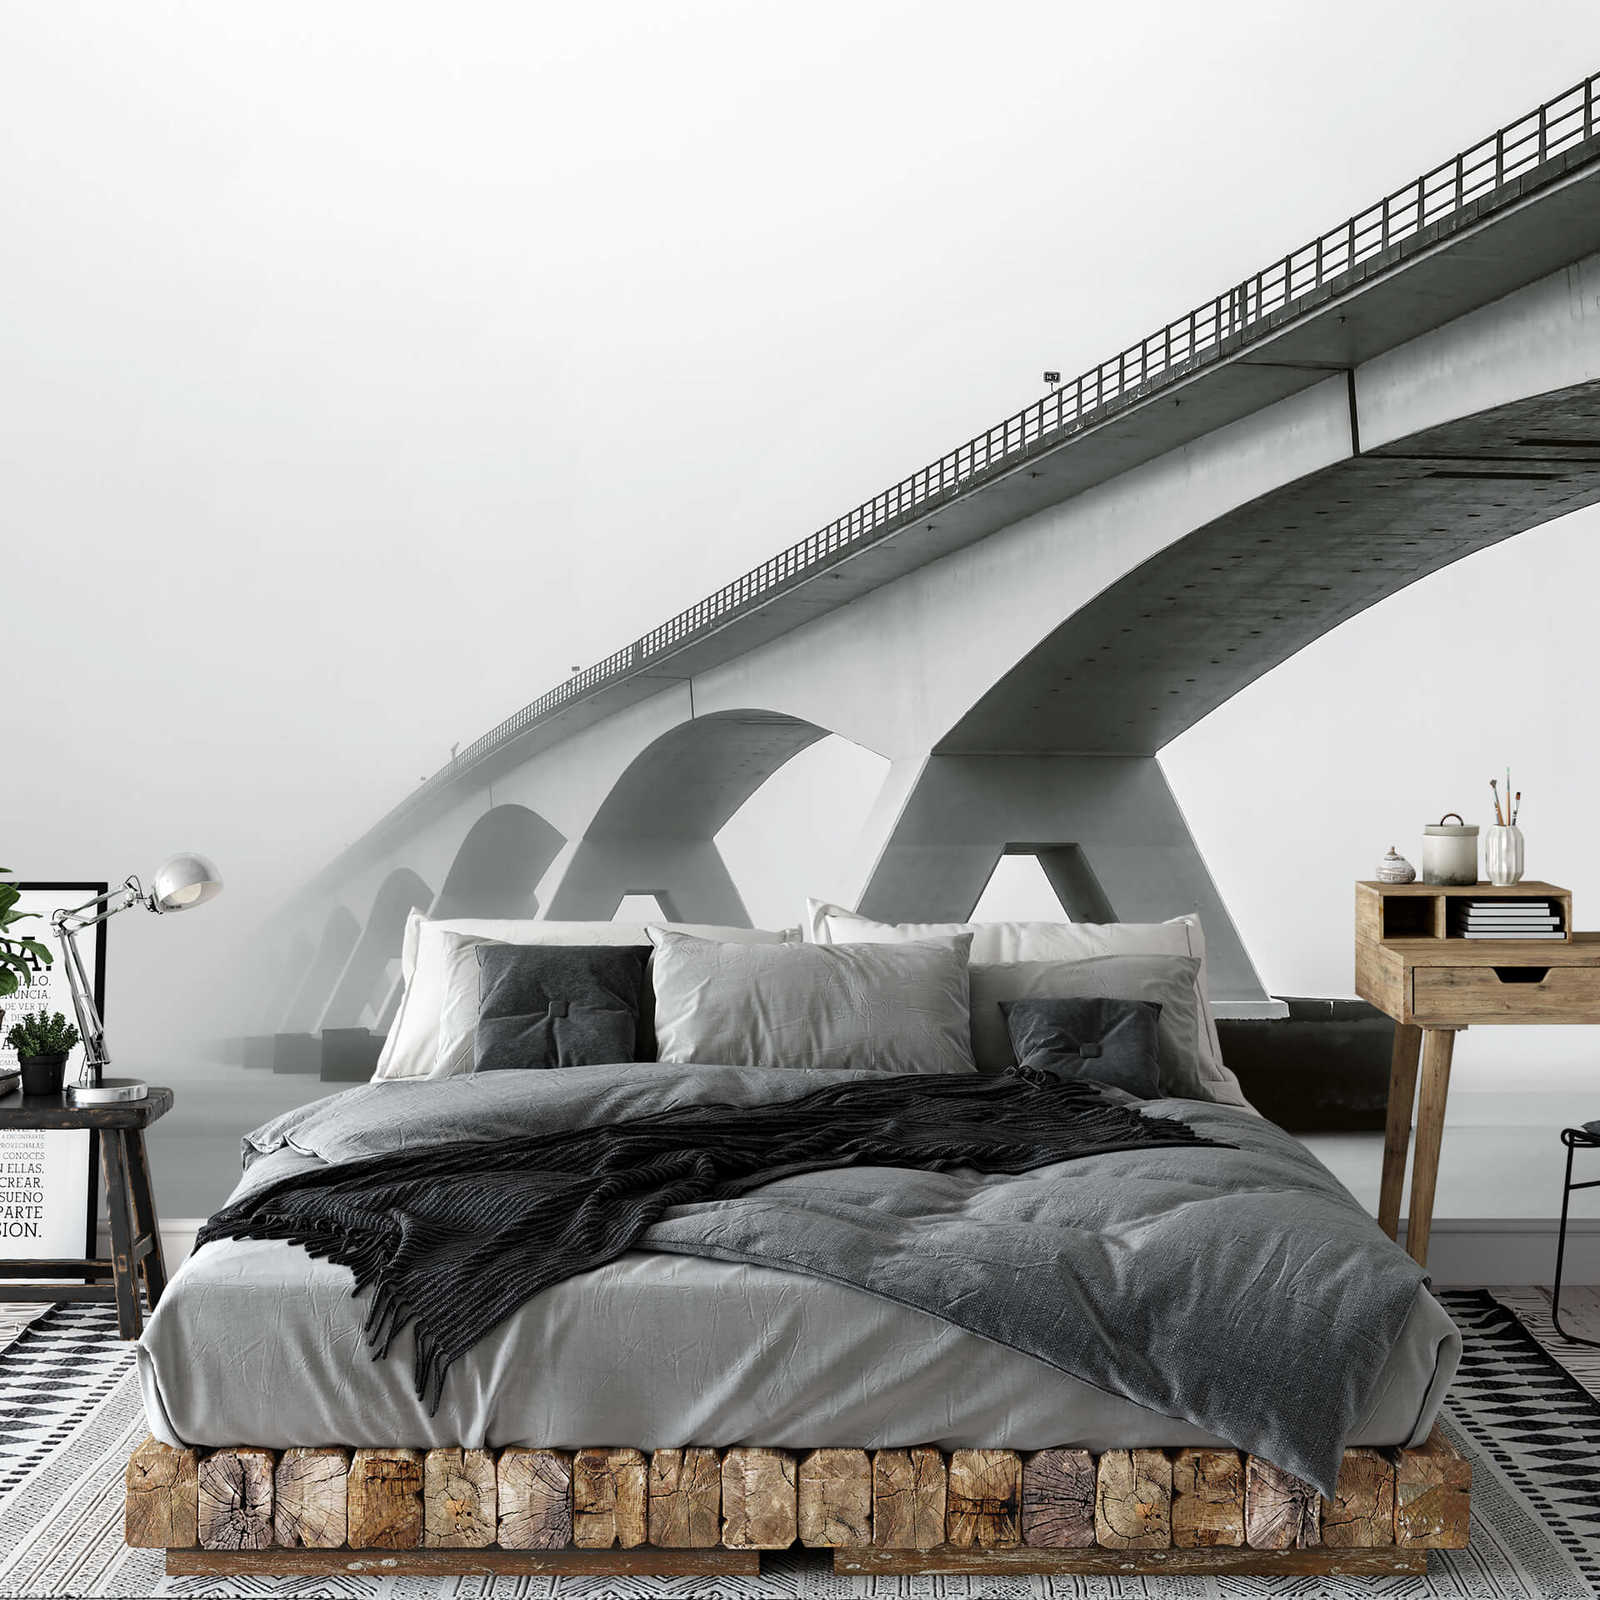             Photo wallpaper bridge in the fog - grey, white, black
        